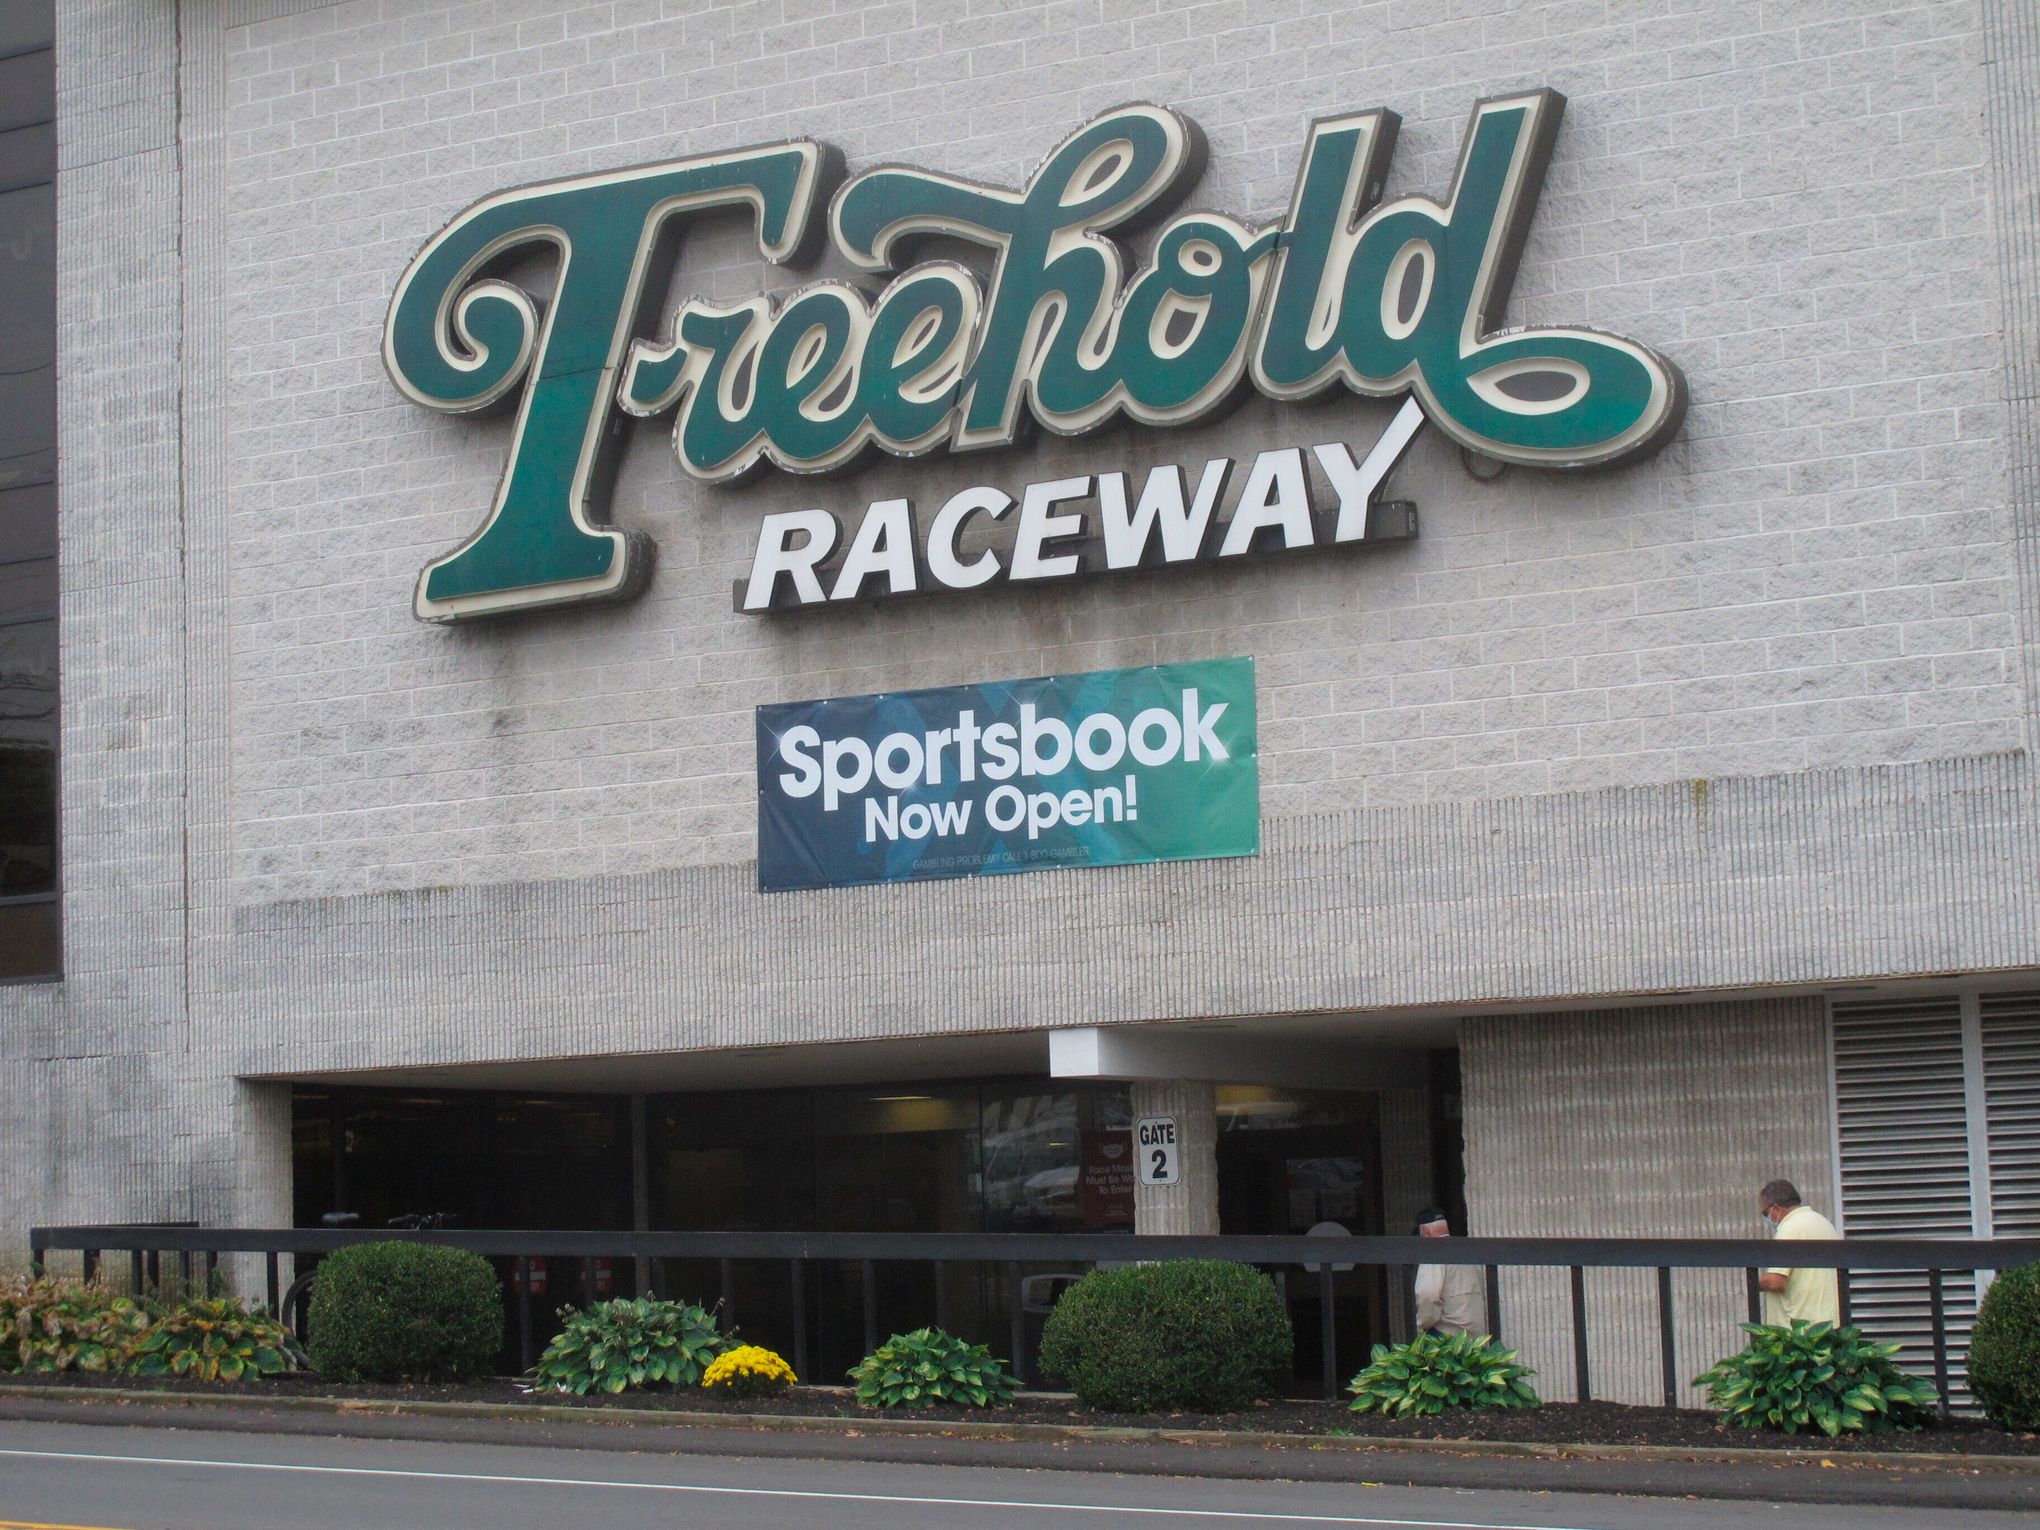 Photo: freehold raceway sportsbook